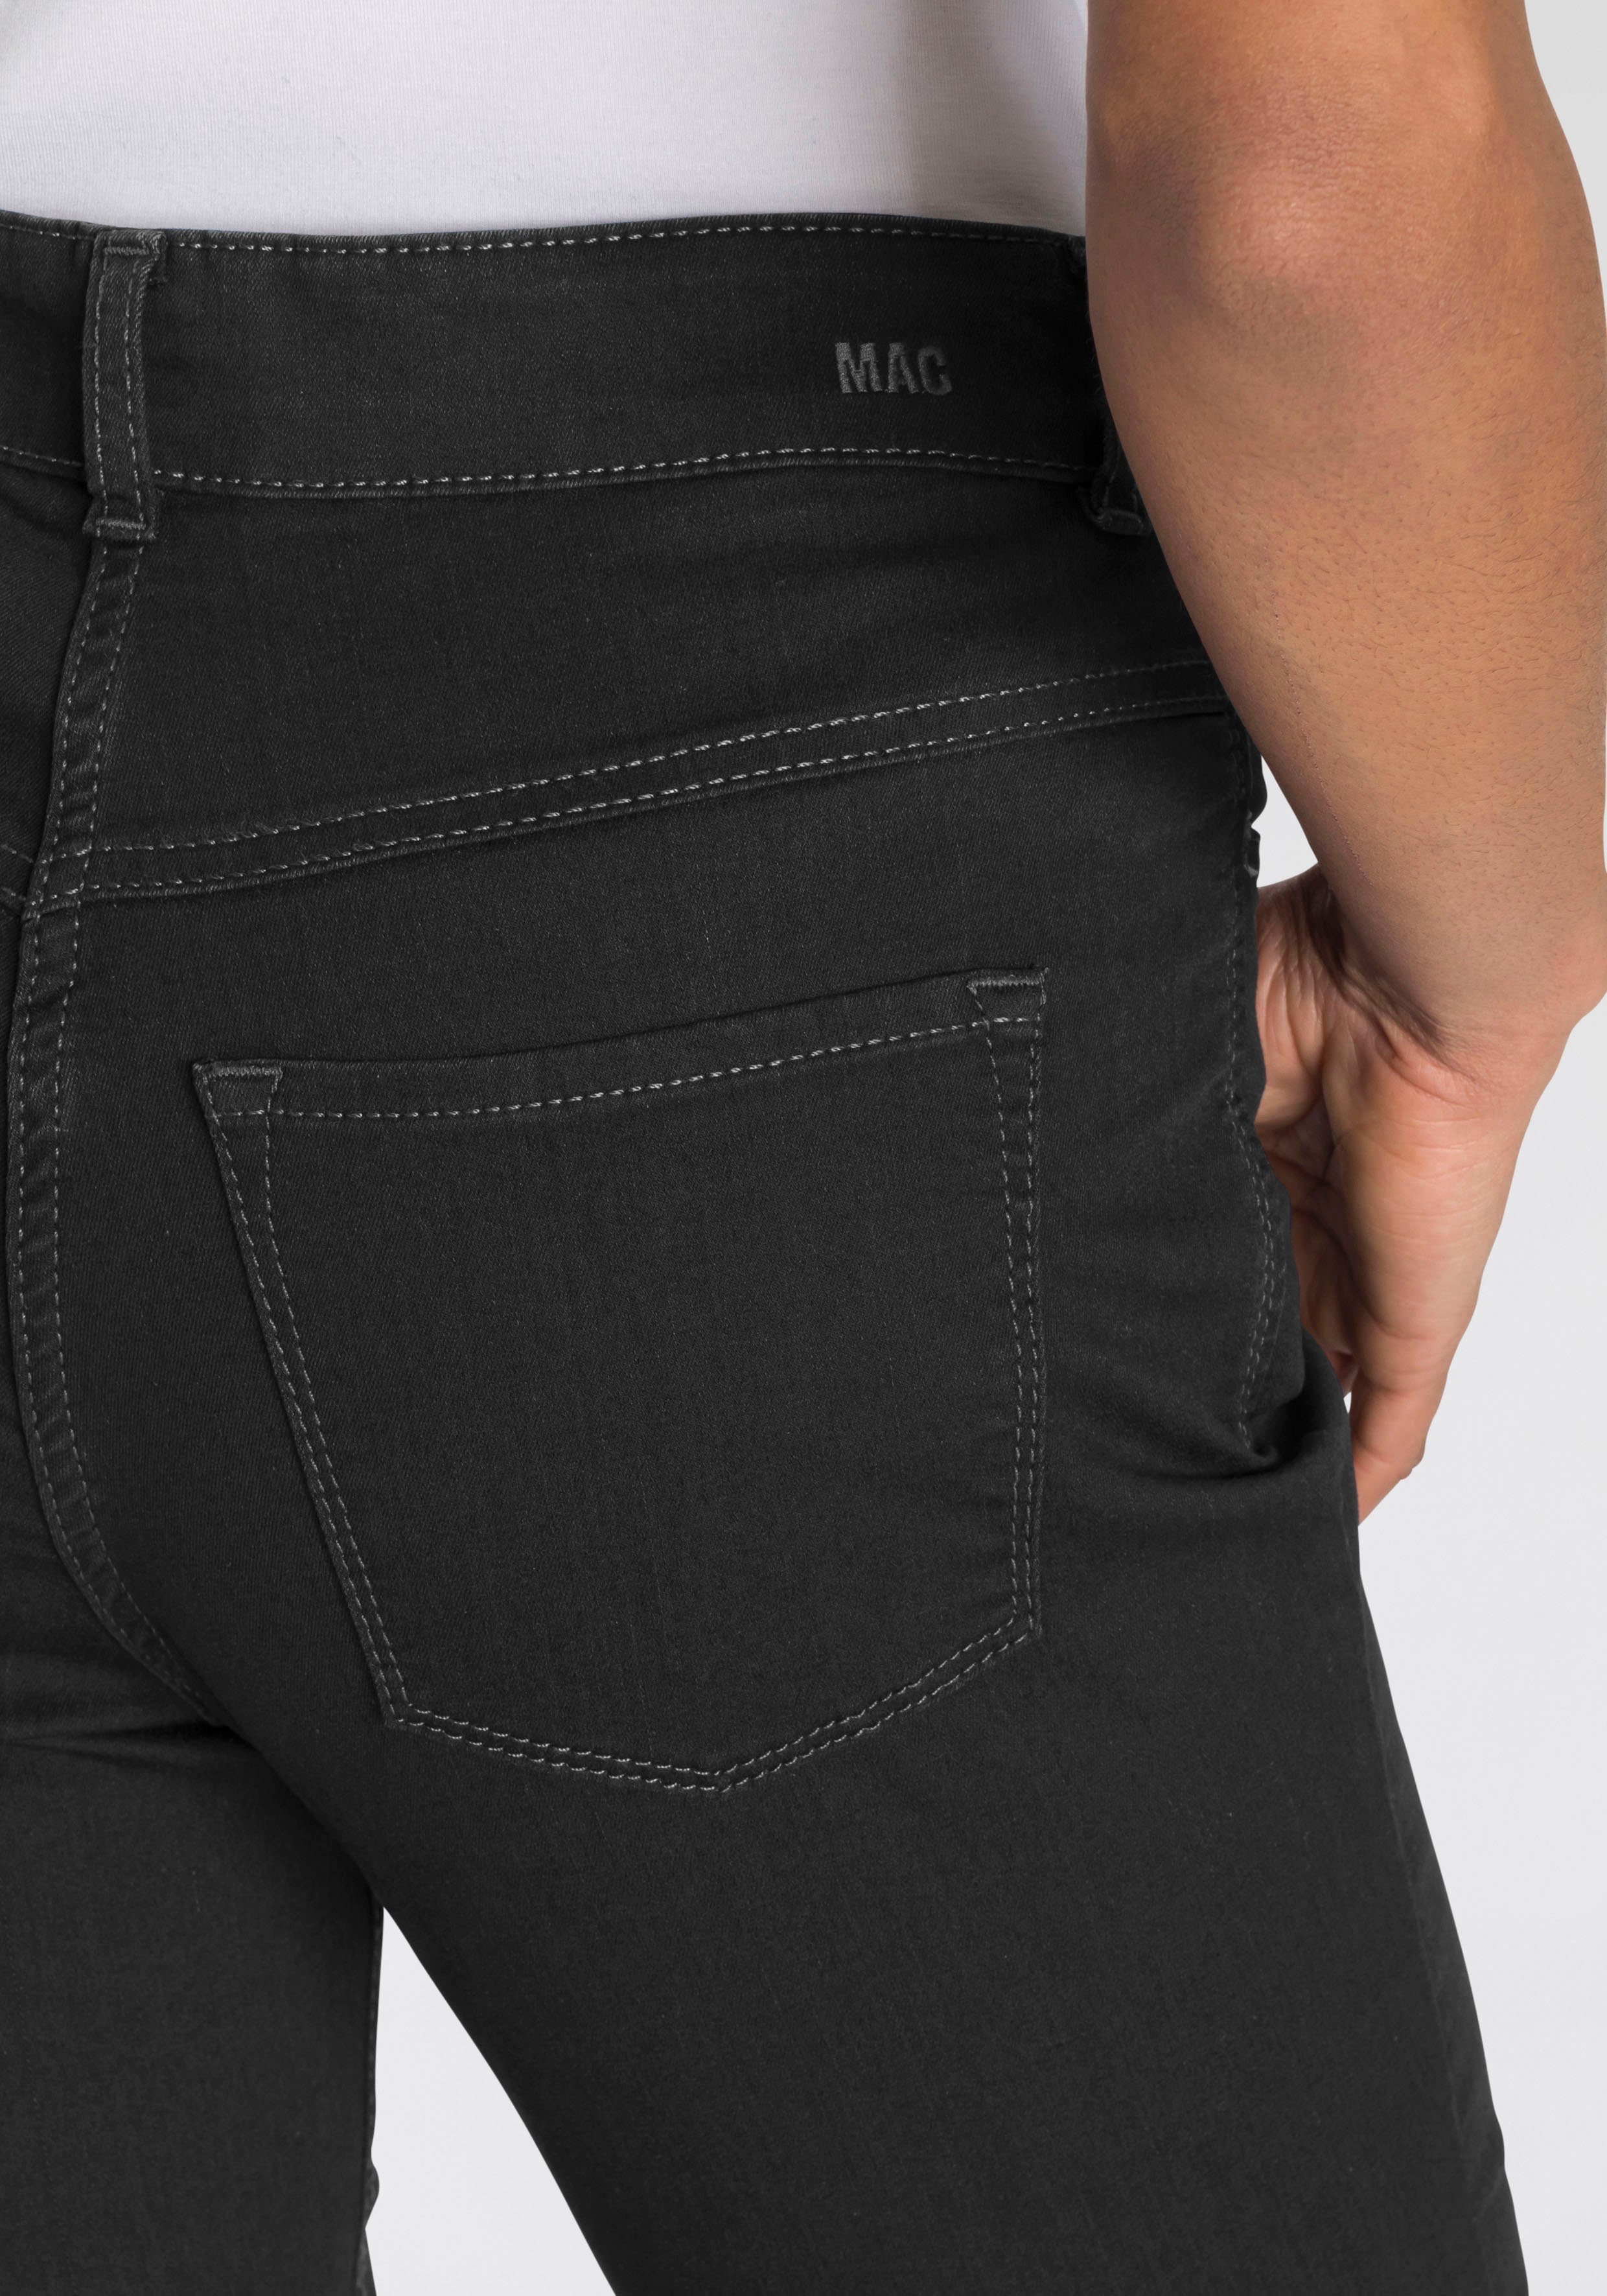 Power-Stretch MAC sitzt Skinny-fit-Jeans bequem black-black ganzen Hiperstretch-Skinny Tag Qualität den